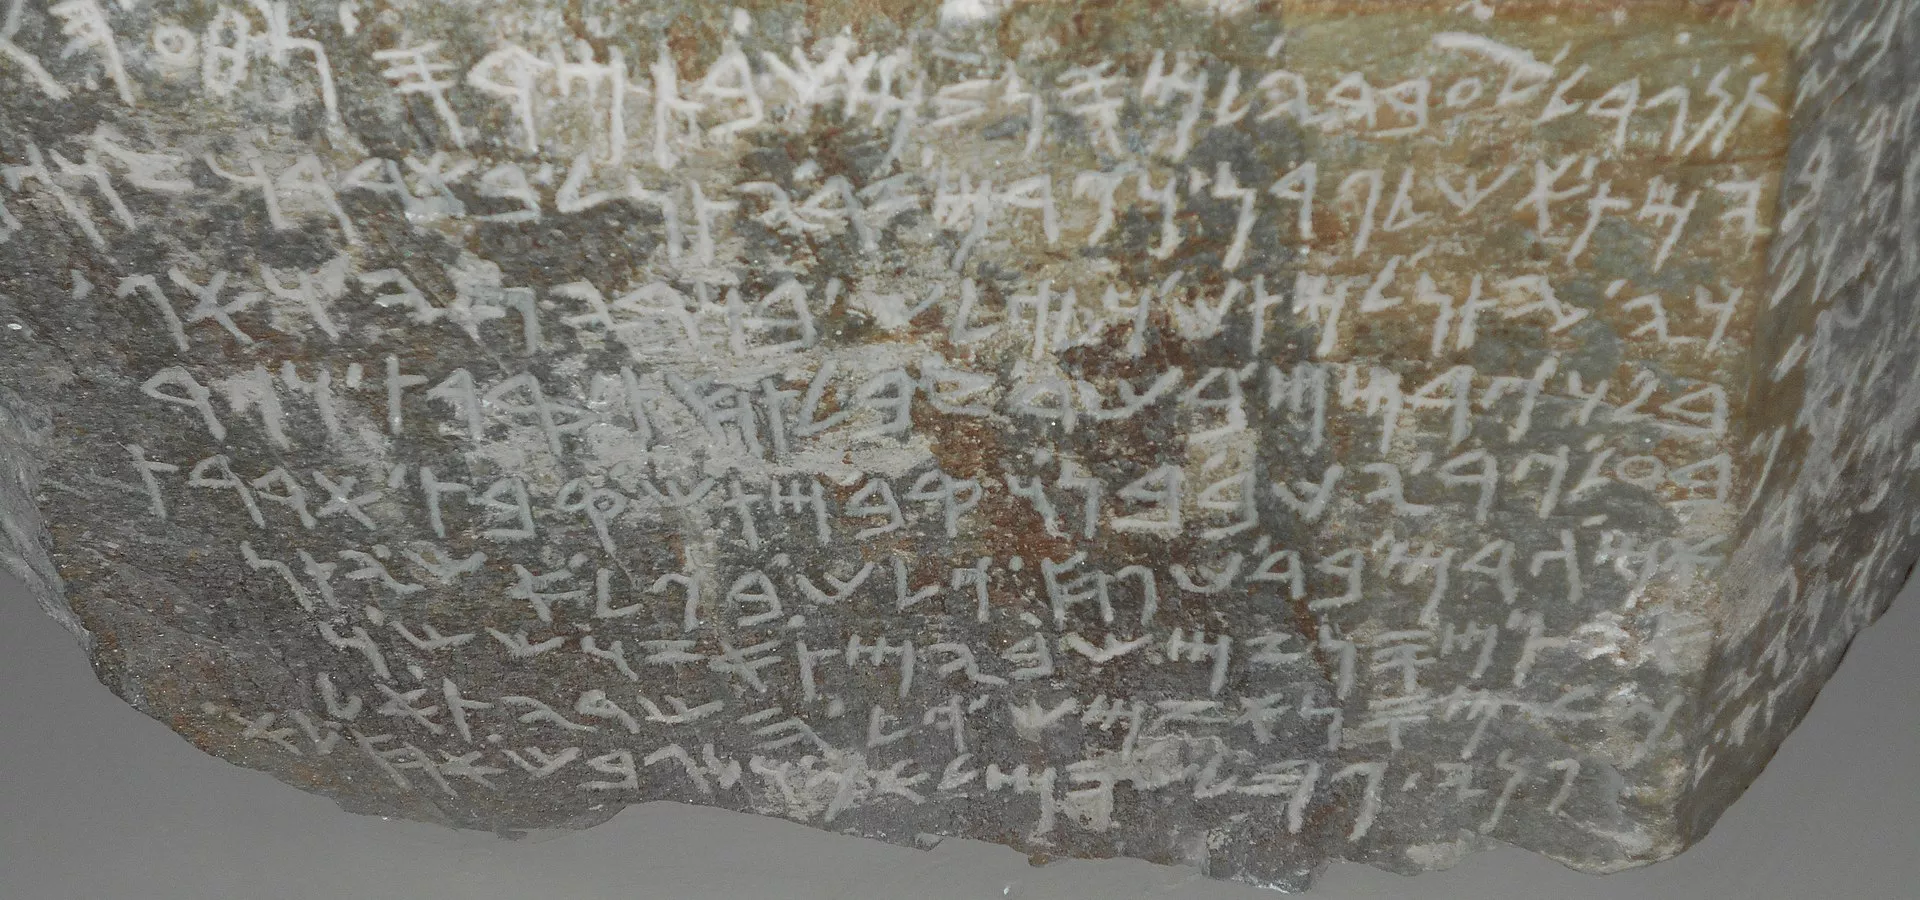 Quelle: Wikipedia: Phönizische Inschrift Arch Museum Alanya